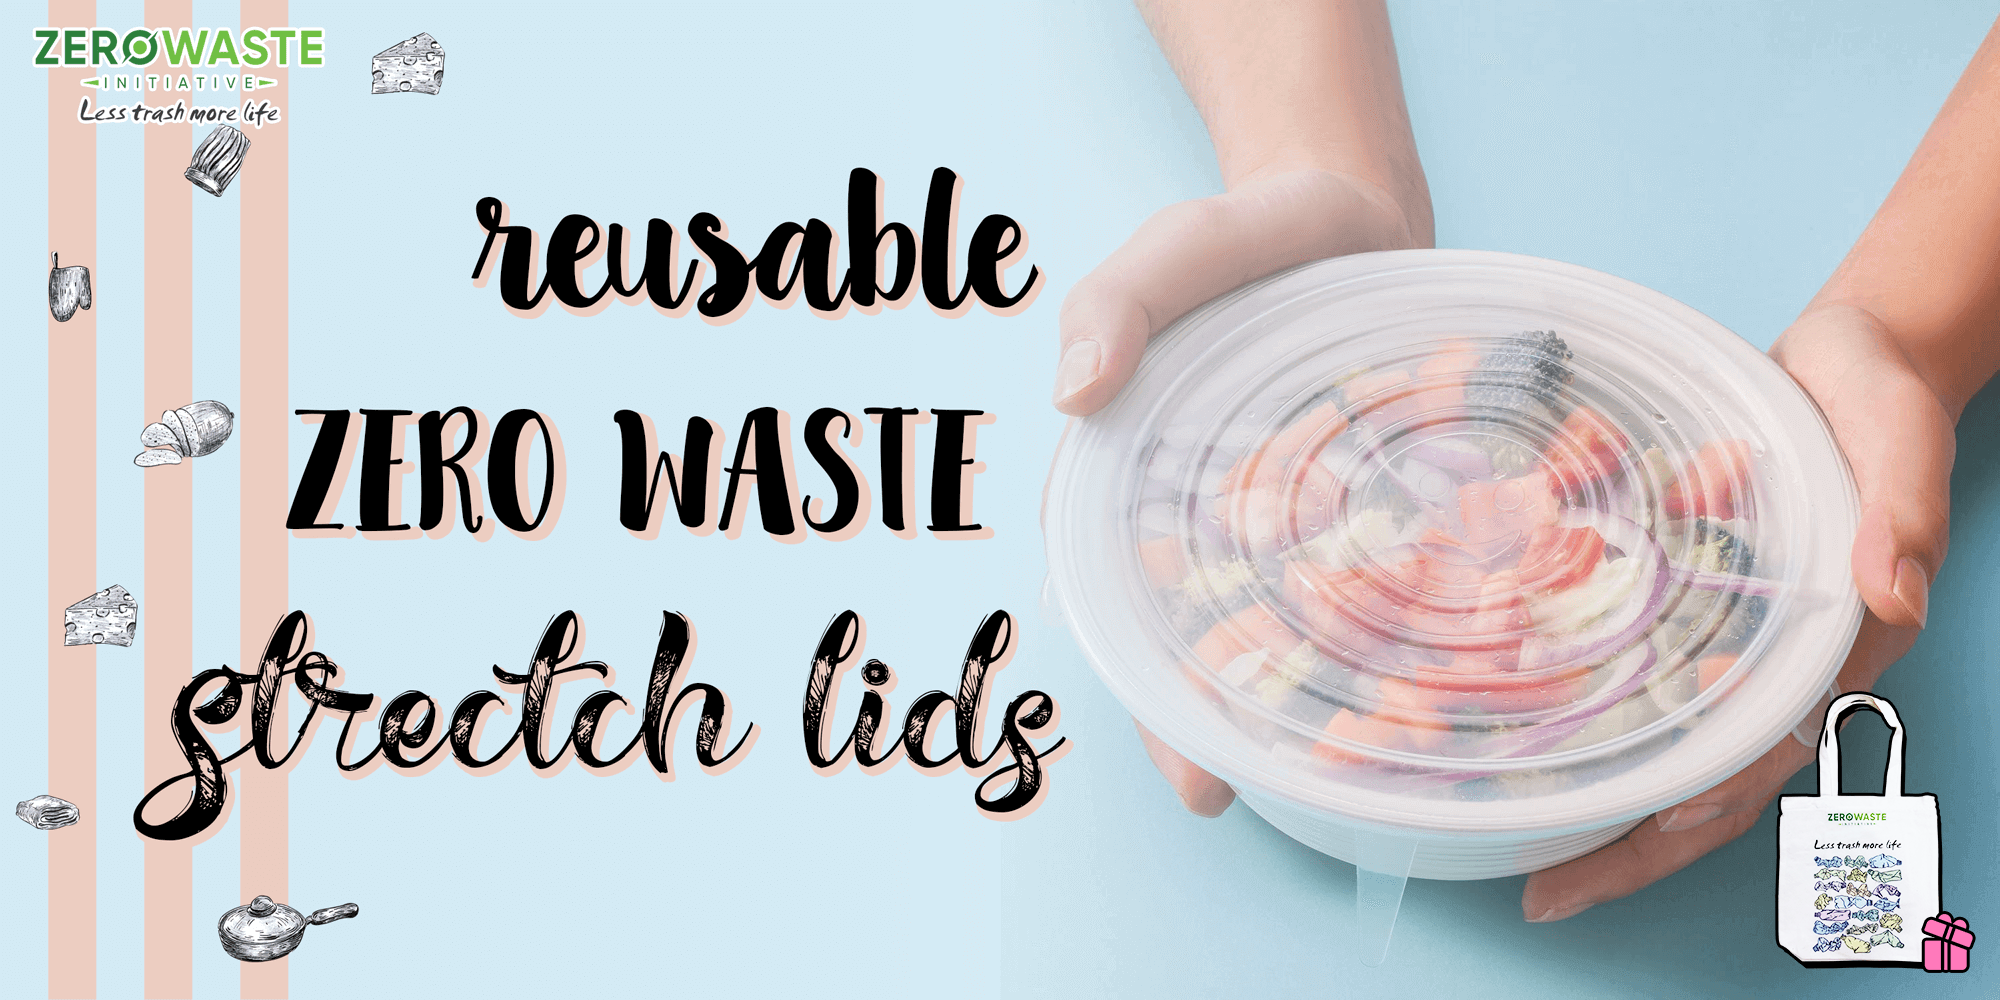 Zero Waste stretch lids